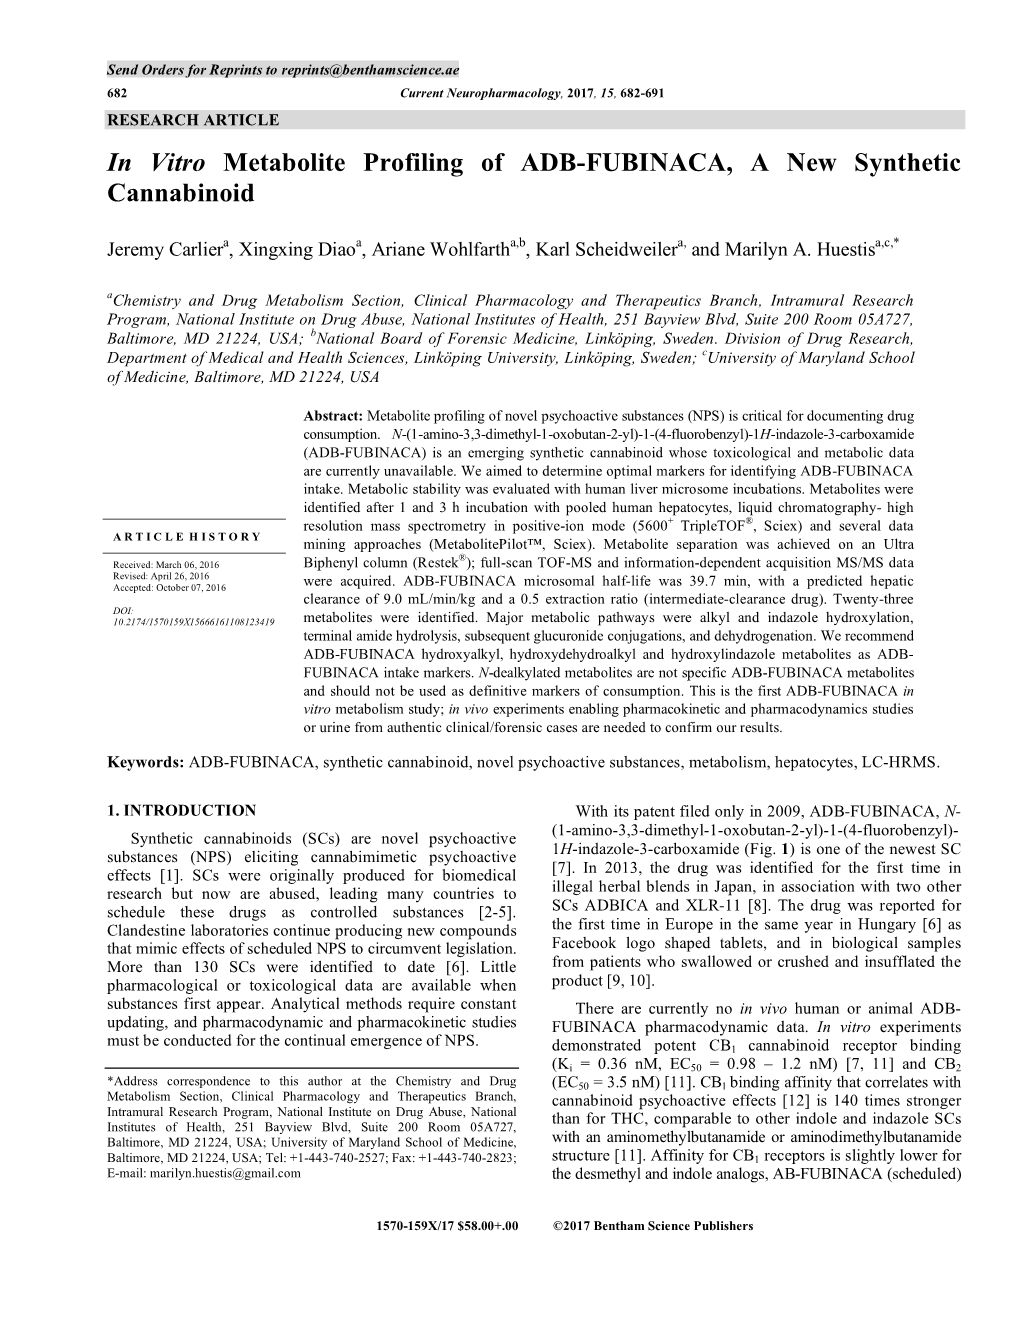 In Vitro Metabolite Profiling of ADB-FUBINACA, a New Synthetic Cannabinoid